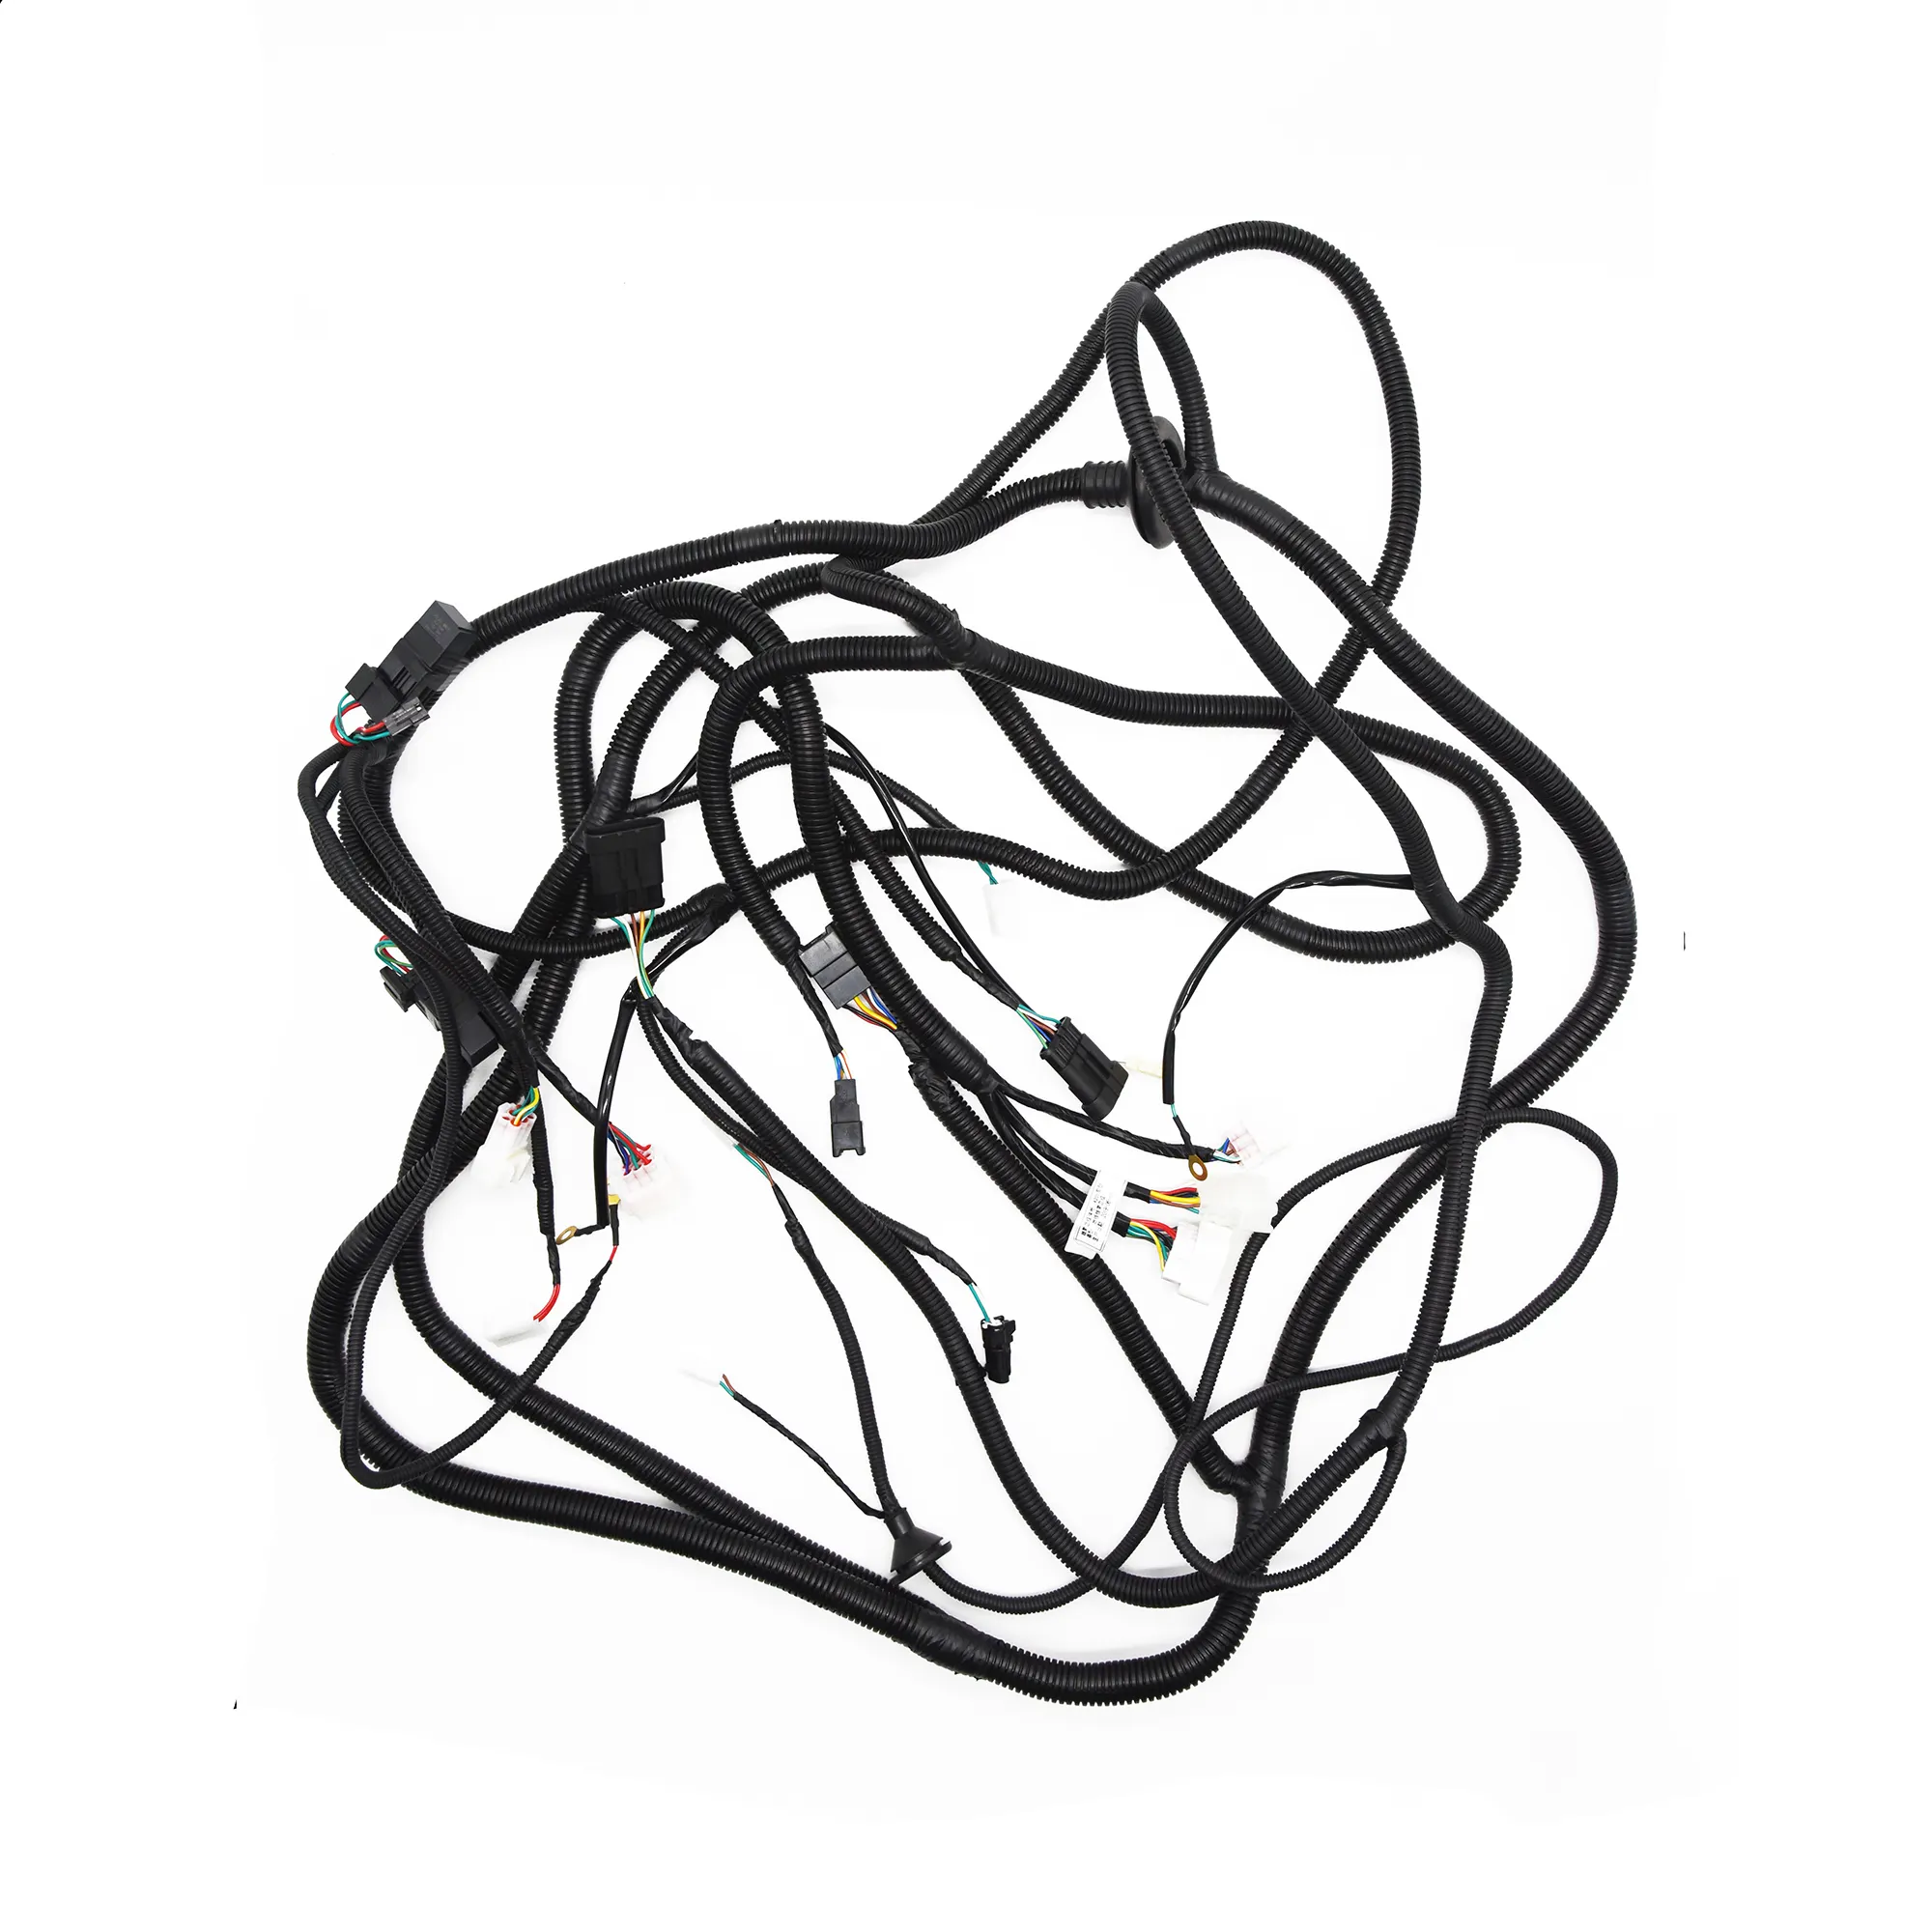 Perakitan kabel Harness kawat kualitas tinggi harness kabel otomotif